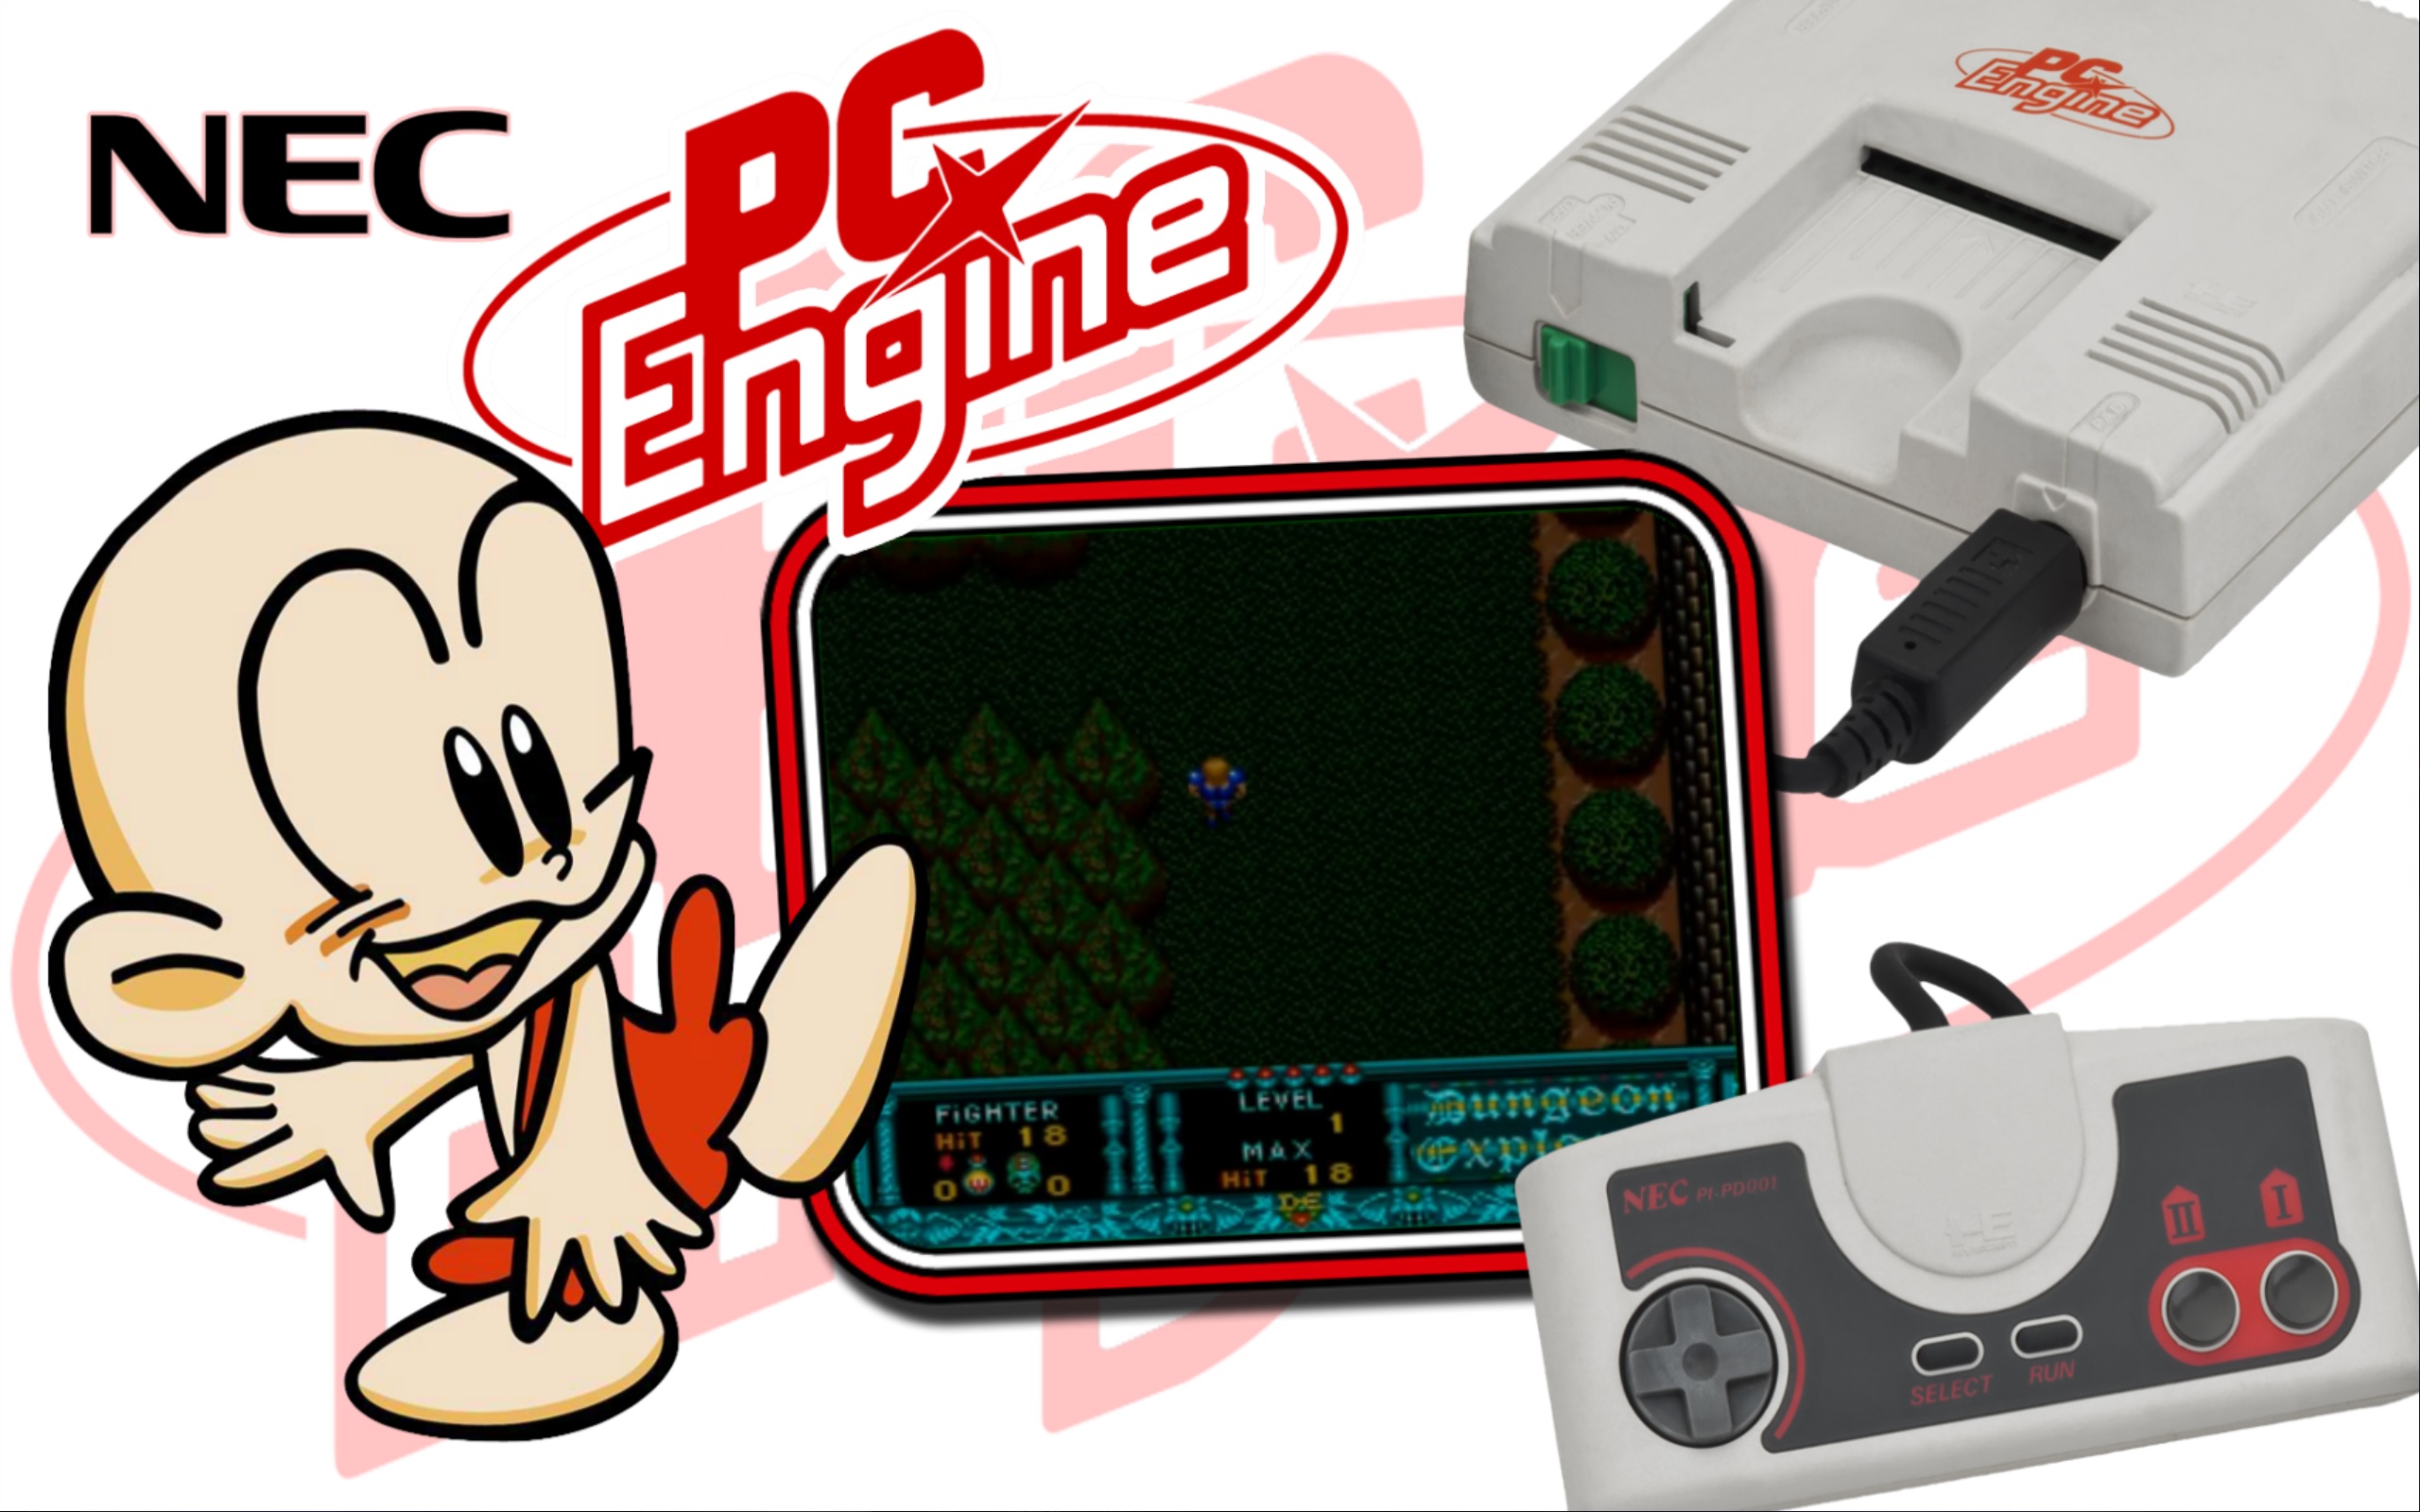 NEC PC Engine - Game Videos - EmuMovies